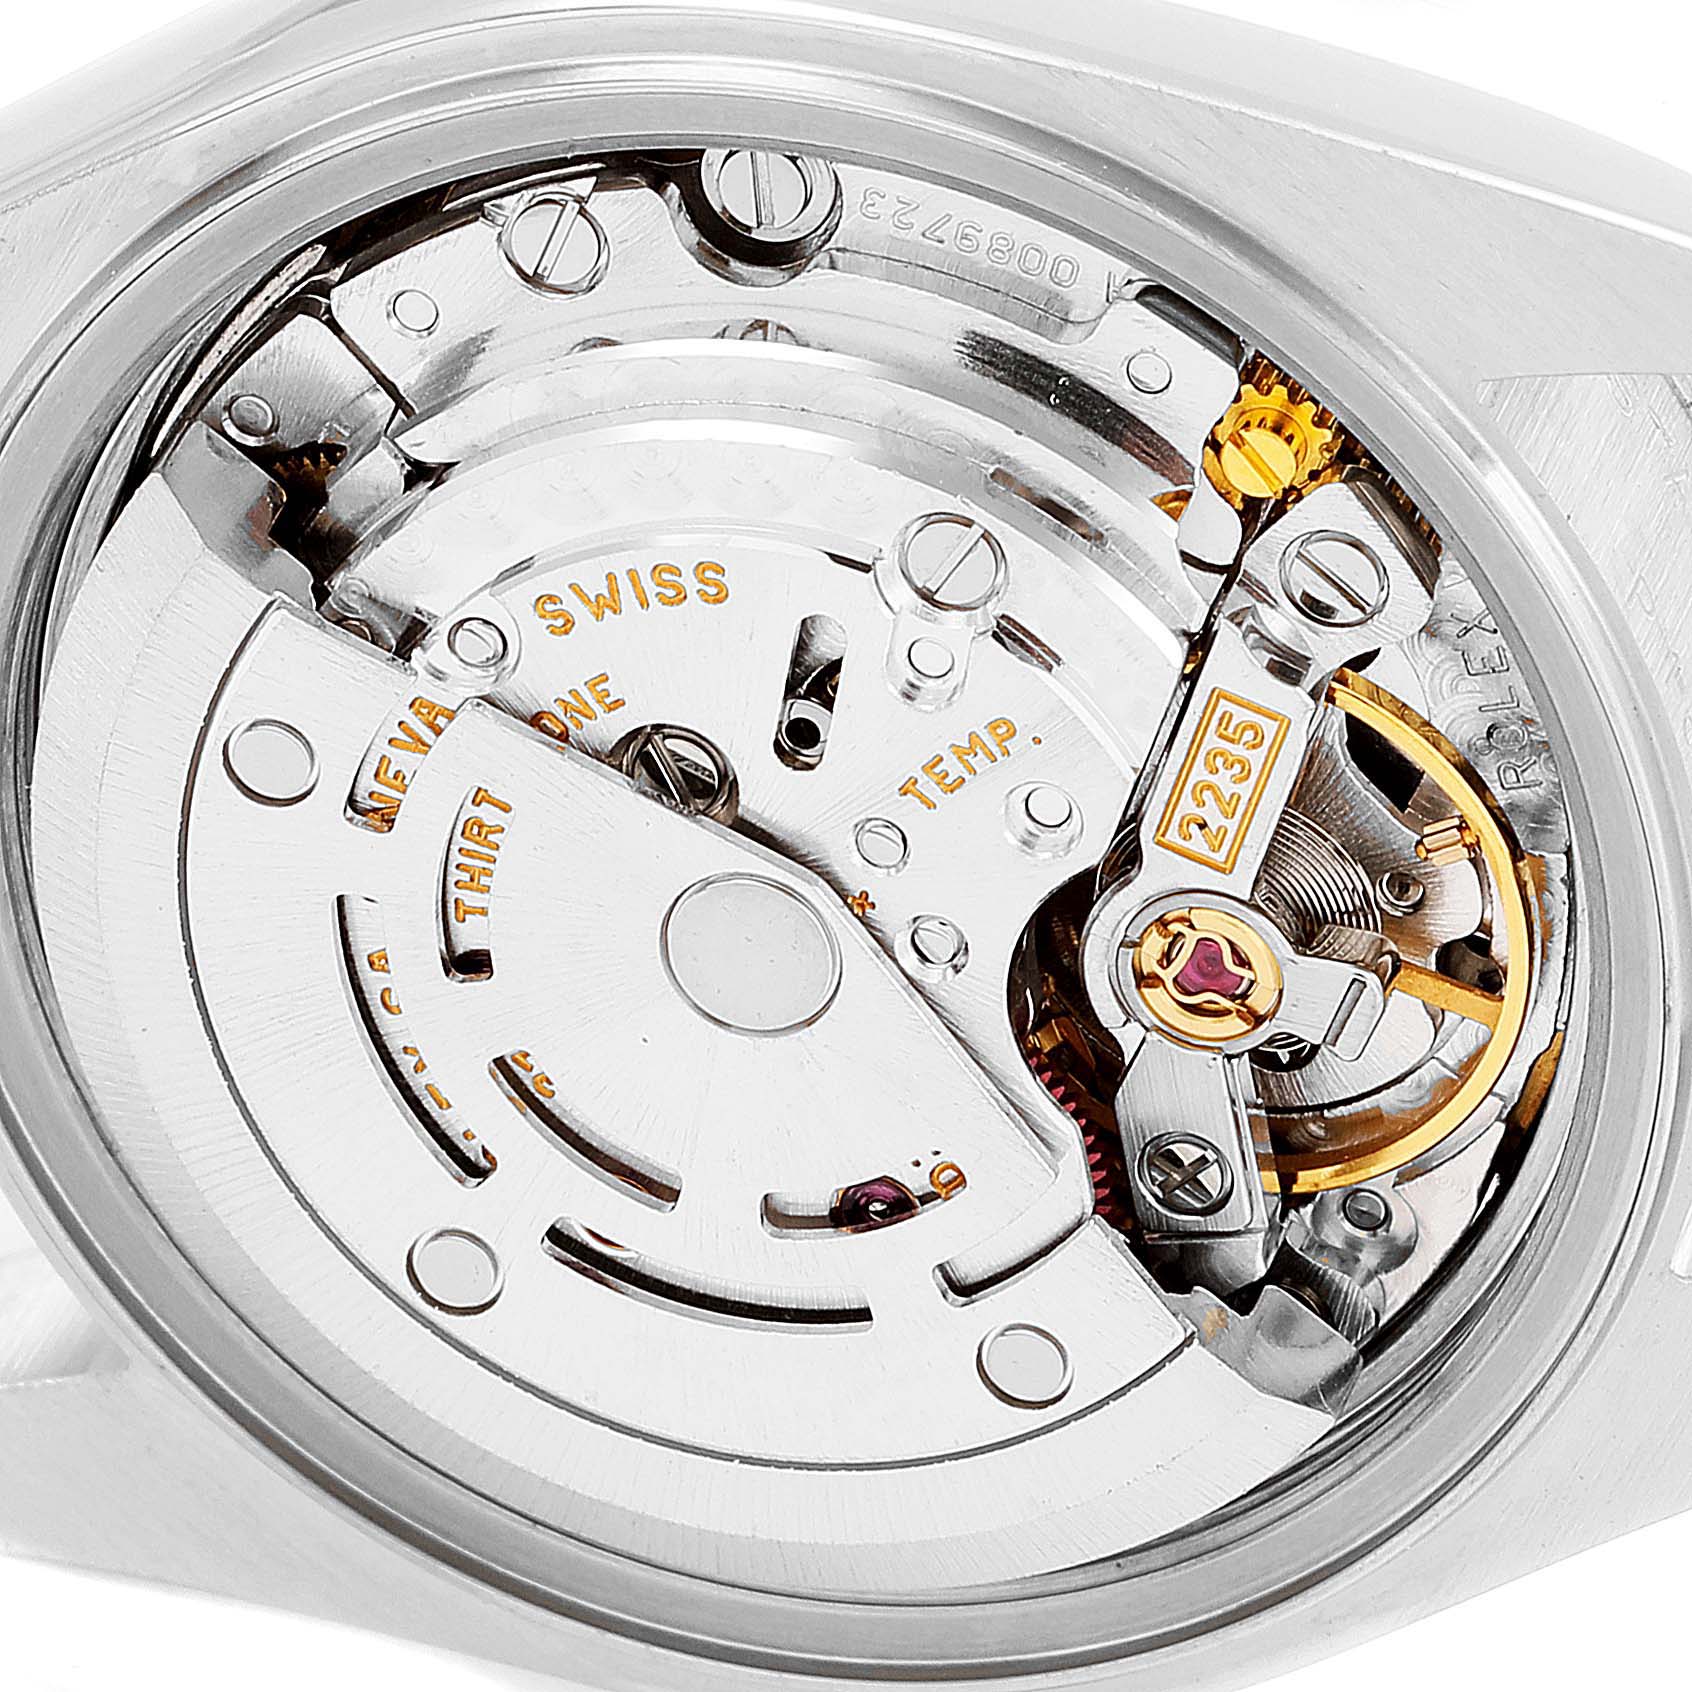 Rolex Blue Stainless Steel Datejust 179174 Automatic Women's Wristwatch 26 Mm